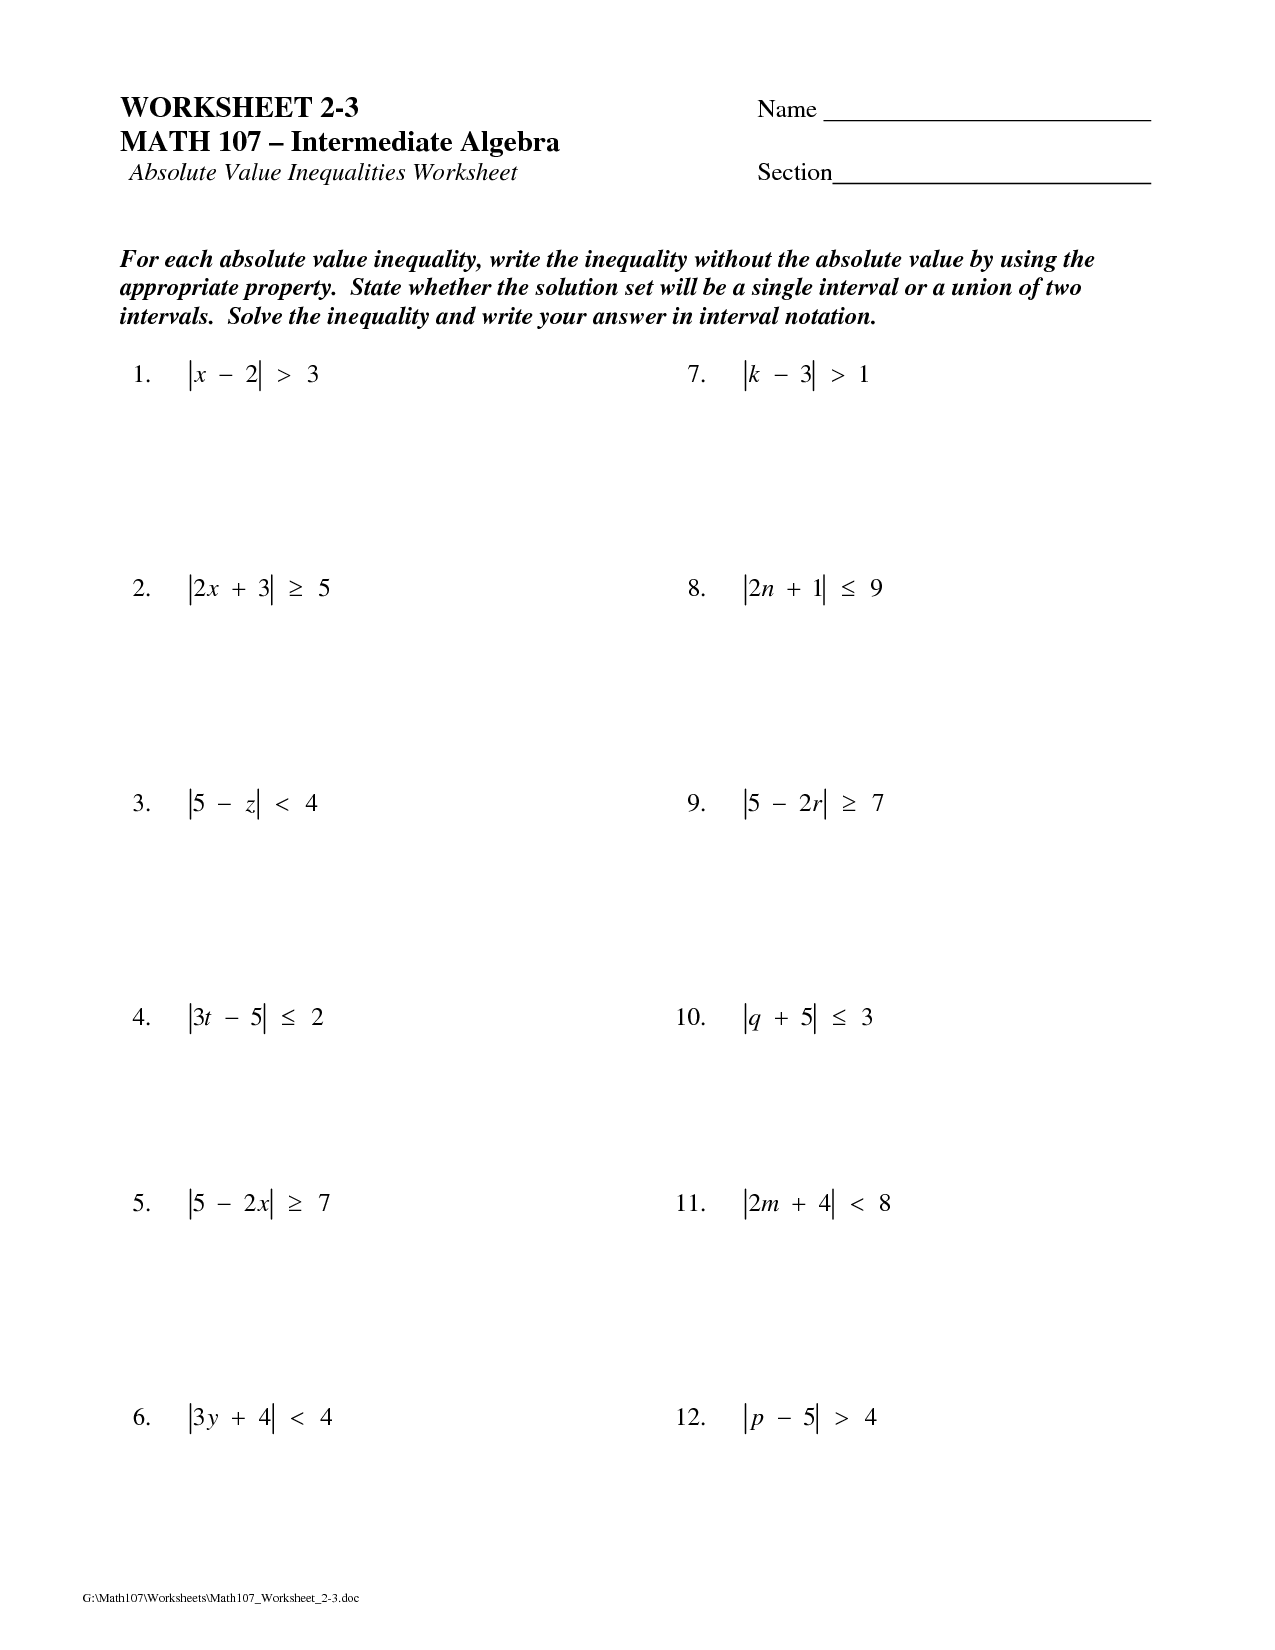 GED Math Worksheets Printable Image